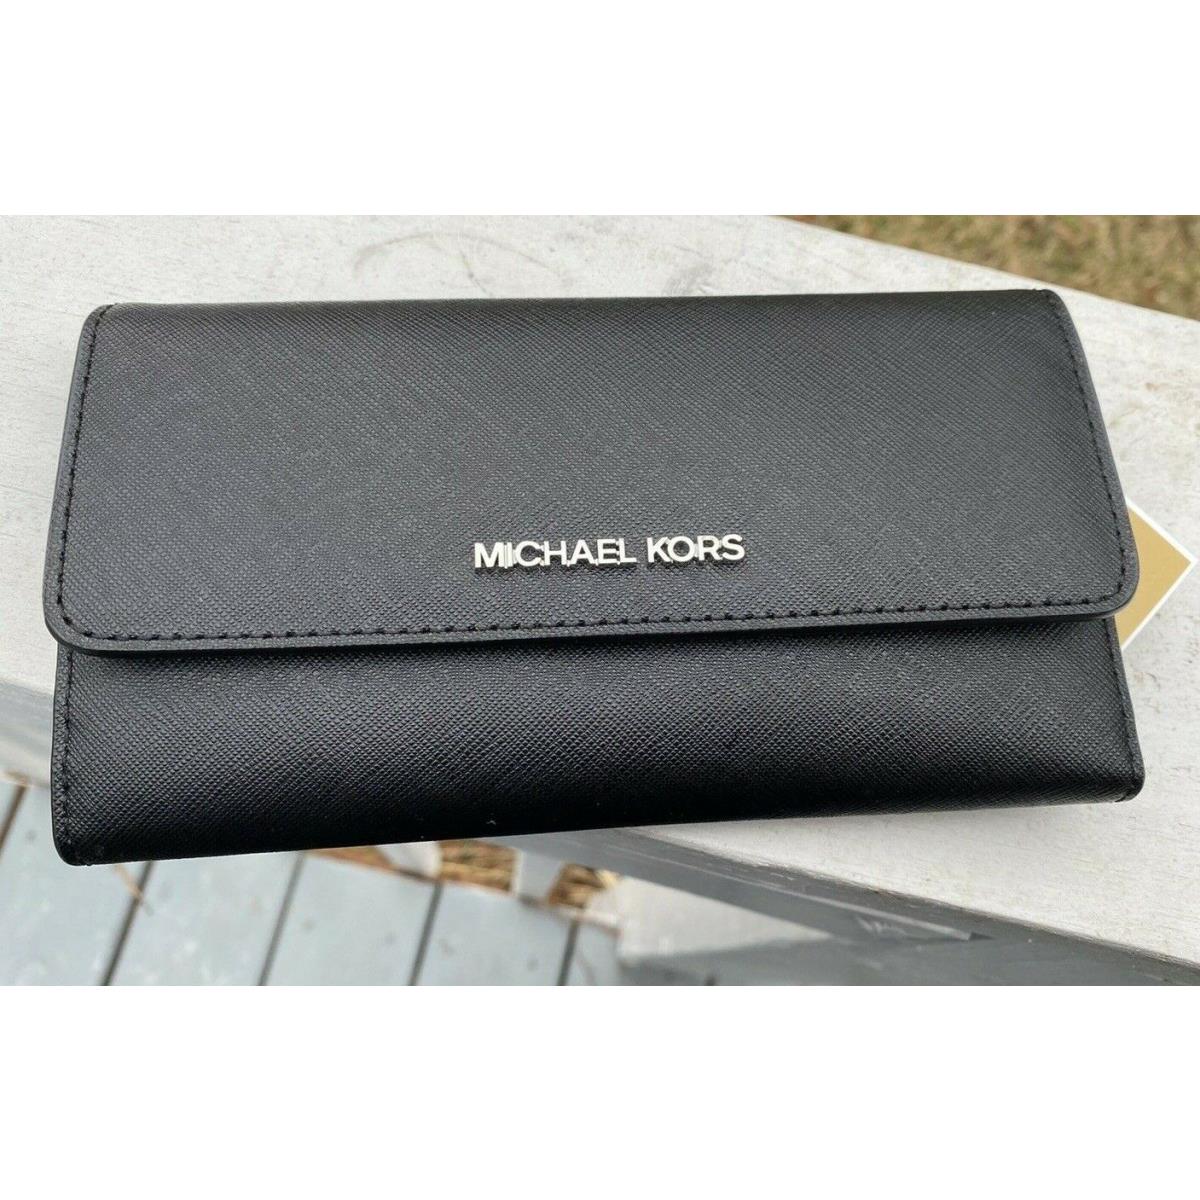 Michael Kors wallet  - Black 0